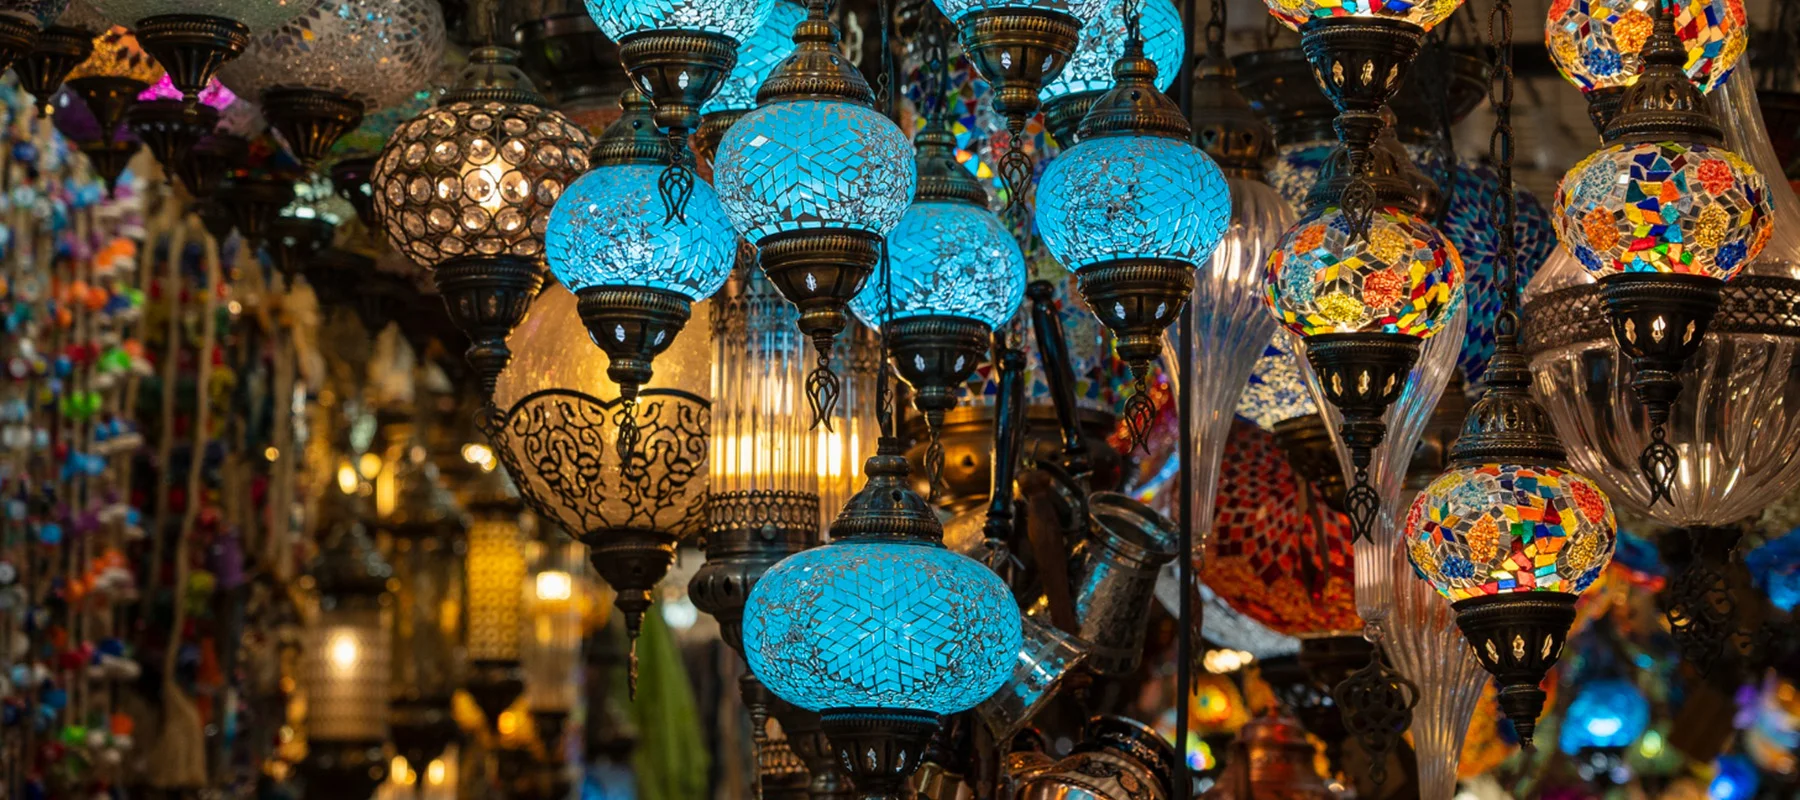 Qaysarieh Bazaar, Isfahan: A Glimpse Into Centuries